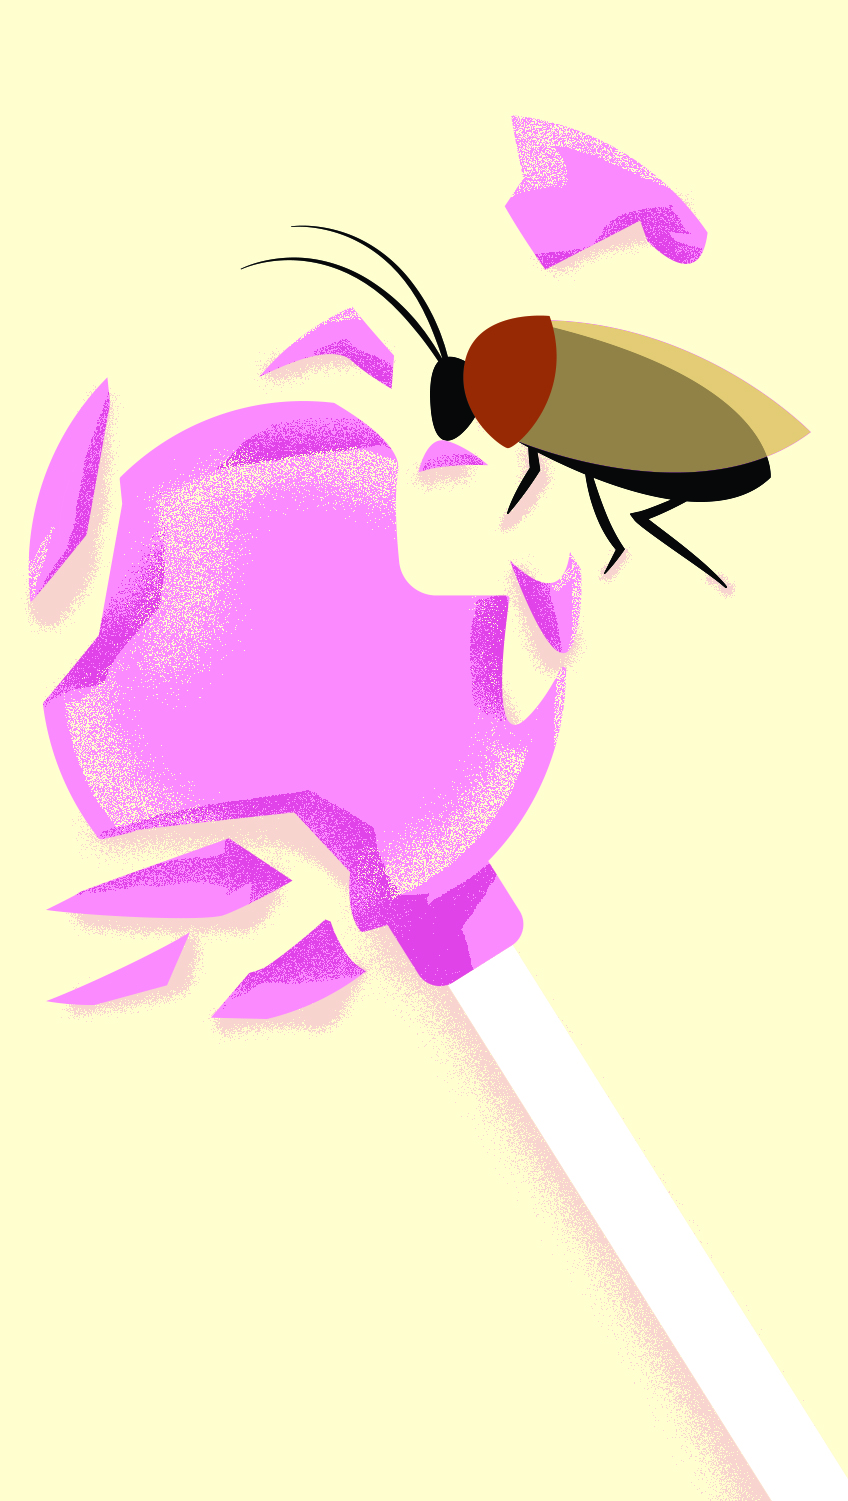 Image Caption: Illustration of a cockroach next to a broken lollipop.